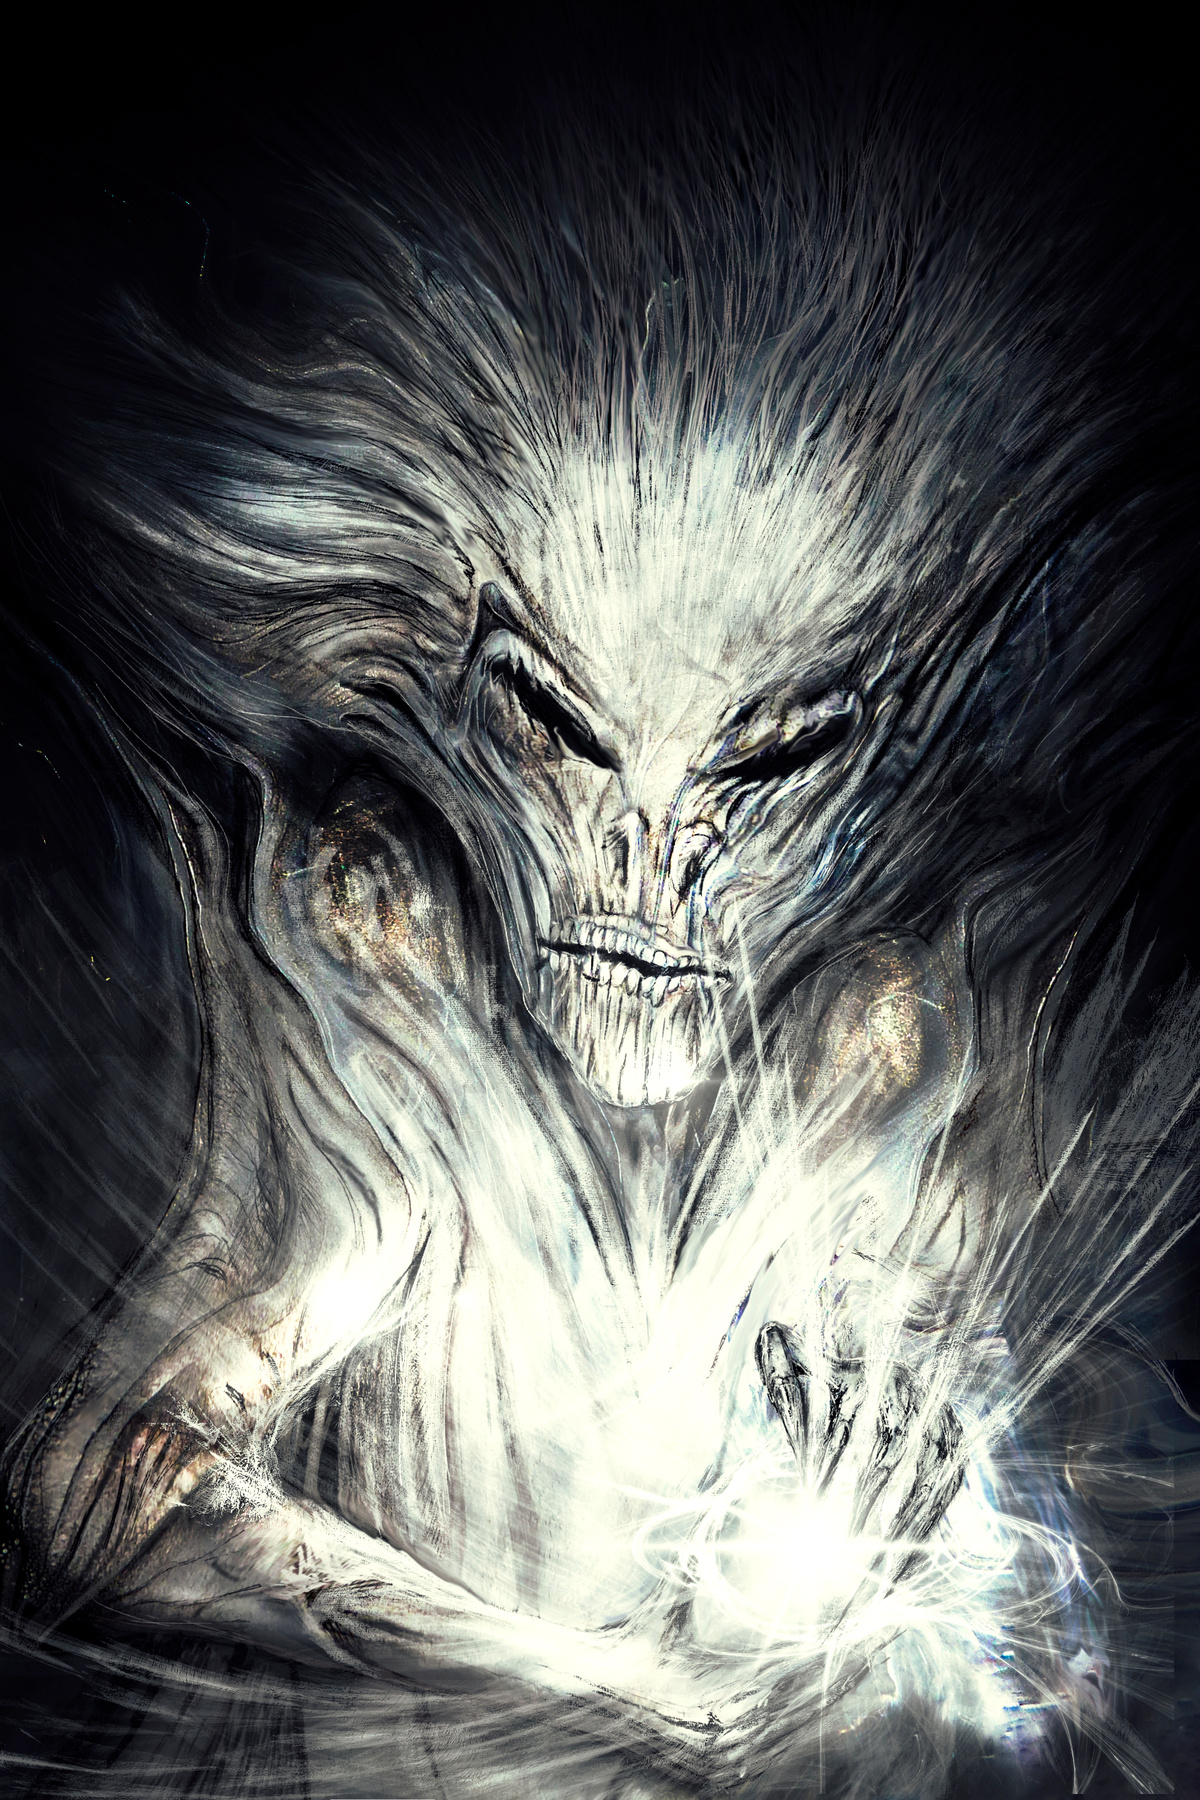 Vortex графика фантастика искусство фотошоп инопланетянин мысли cg art cg_art digital photoshop mind alien surreal sci_fi